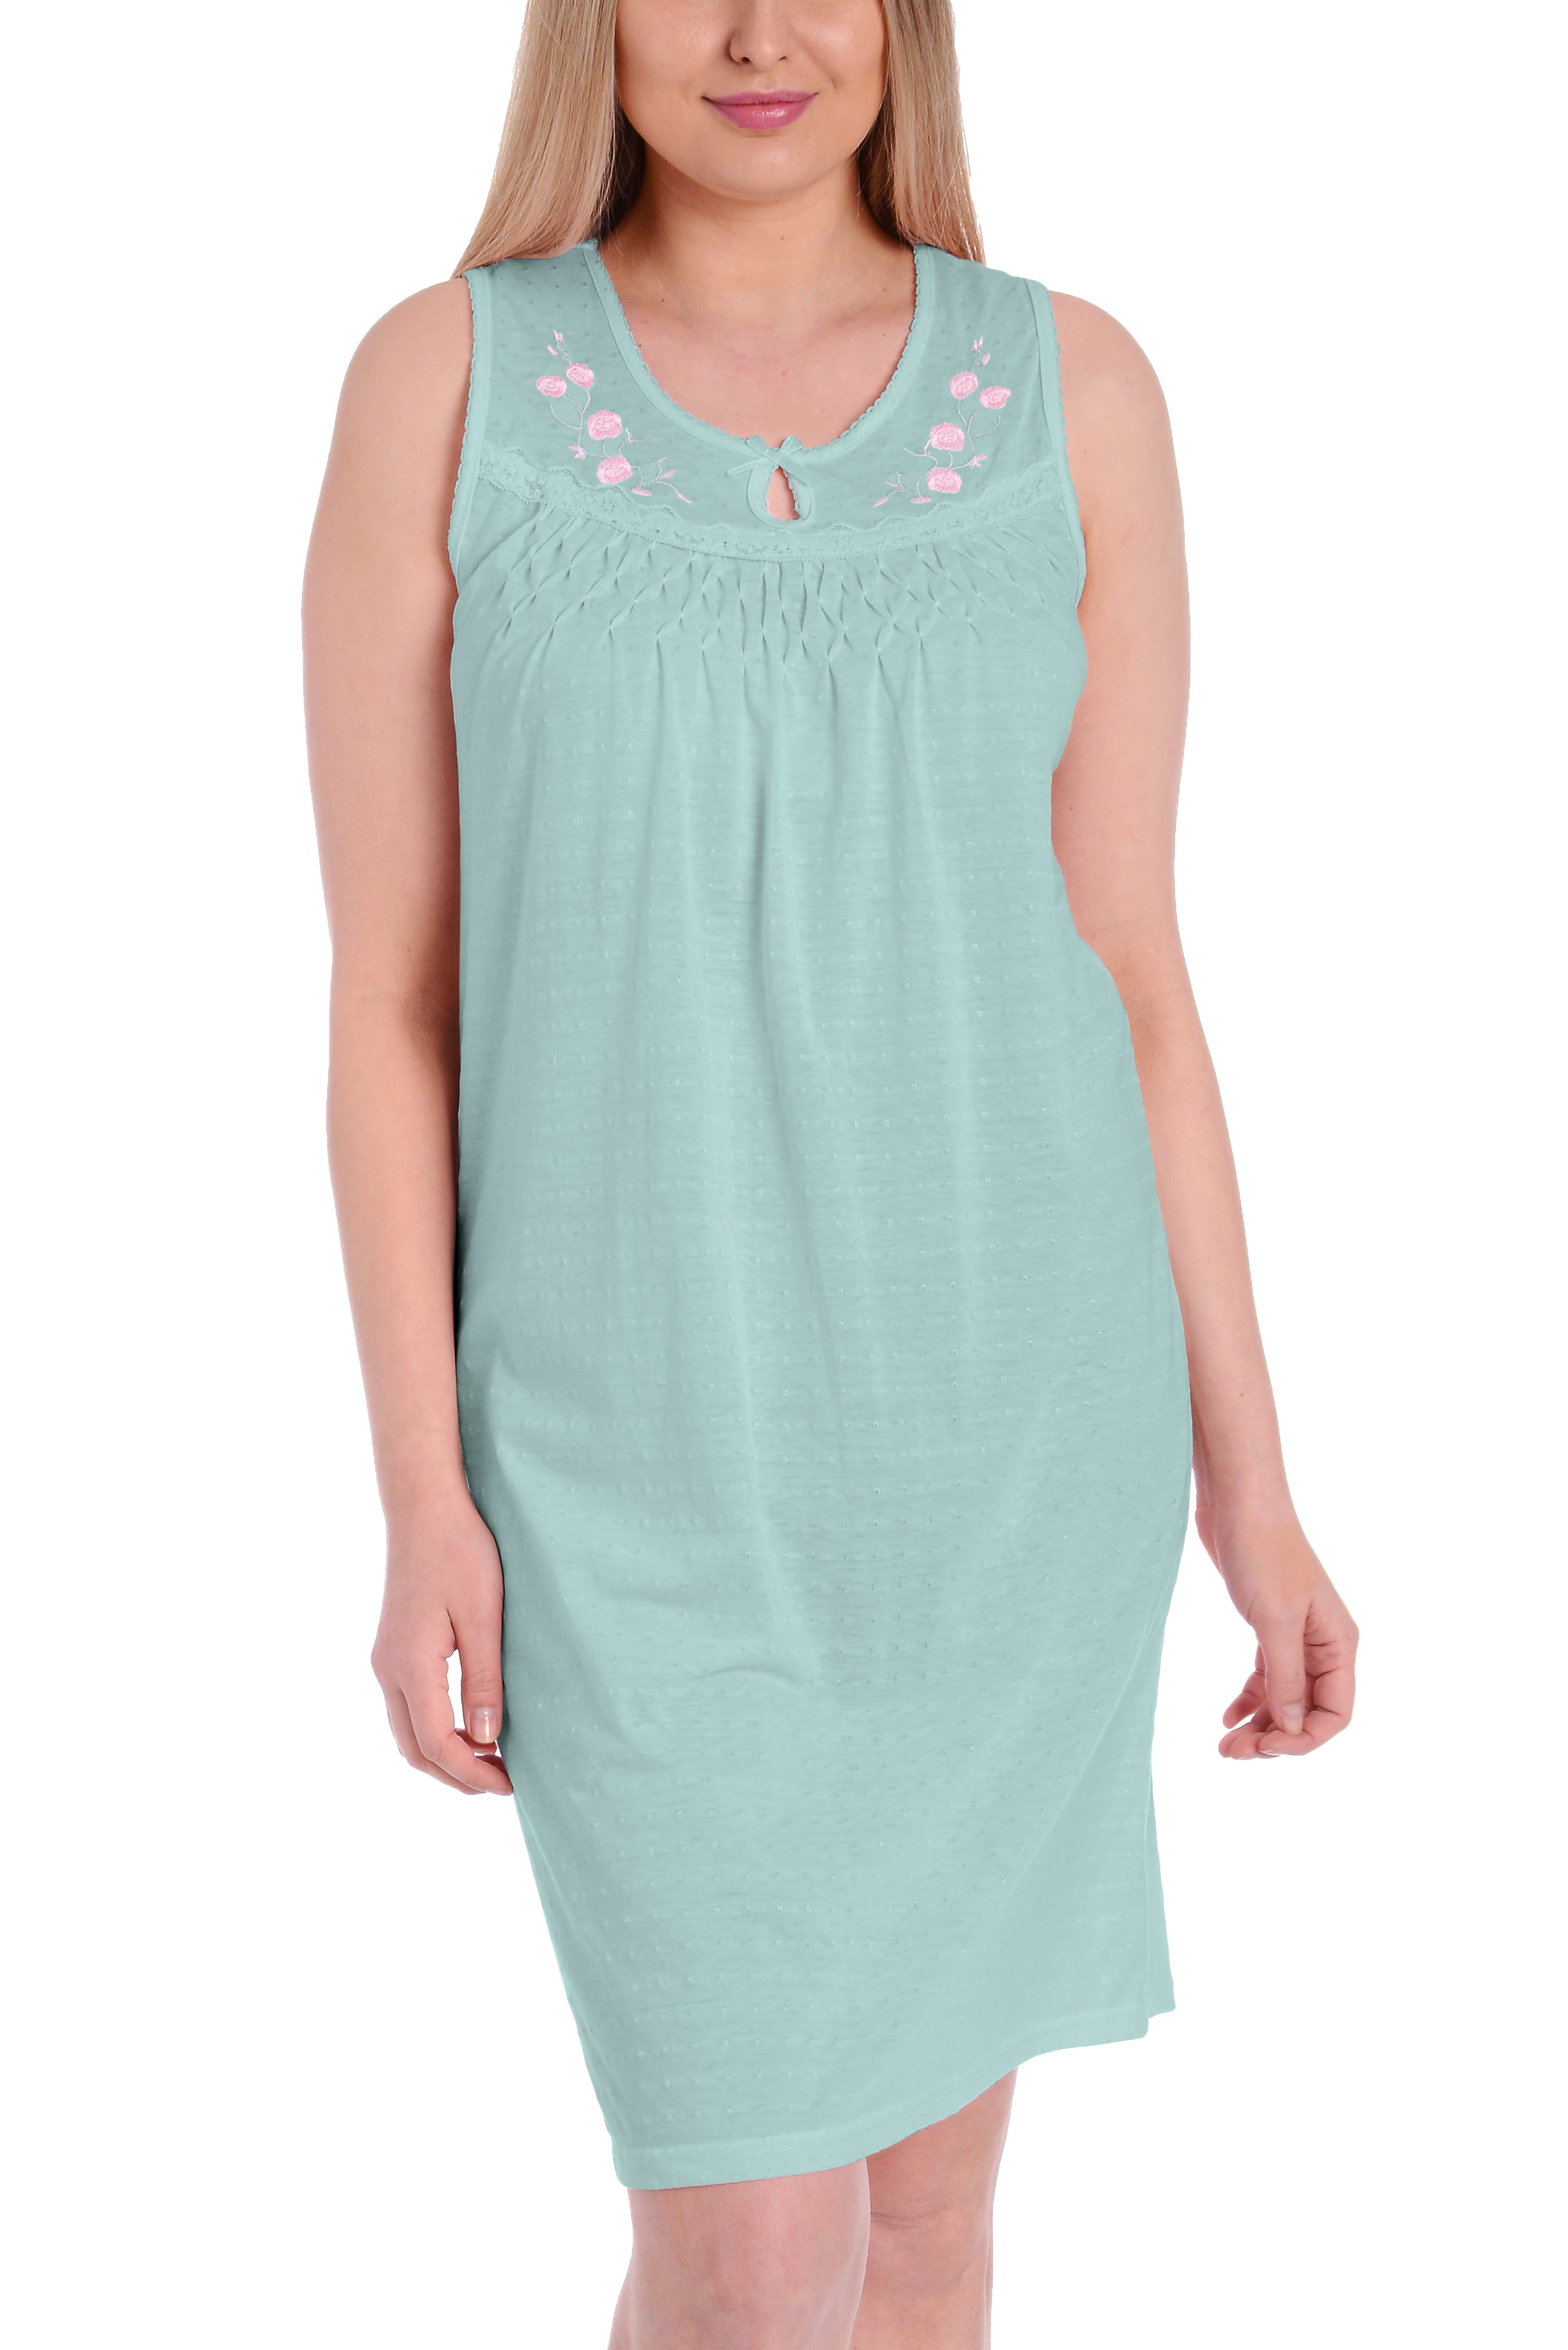 EZI Women's Cotton-rich Sleeveless Nightgown 